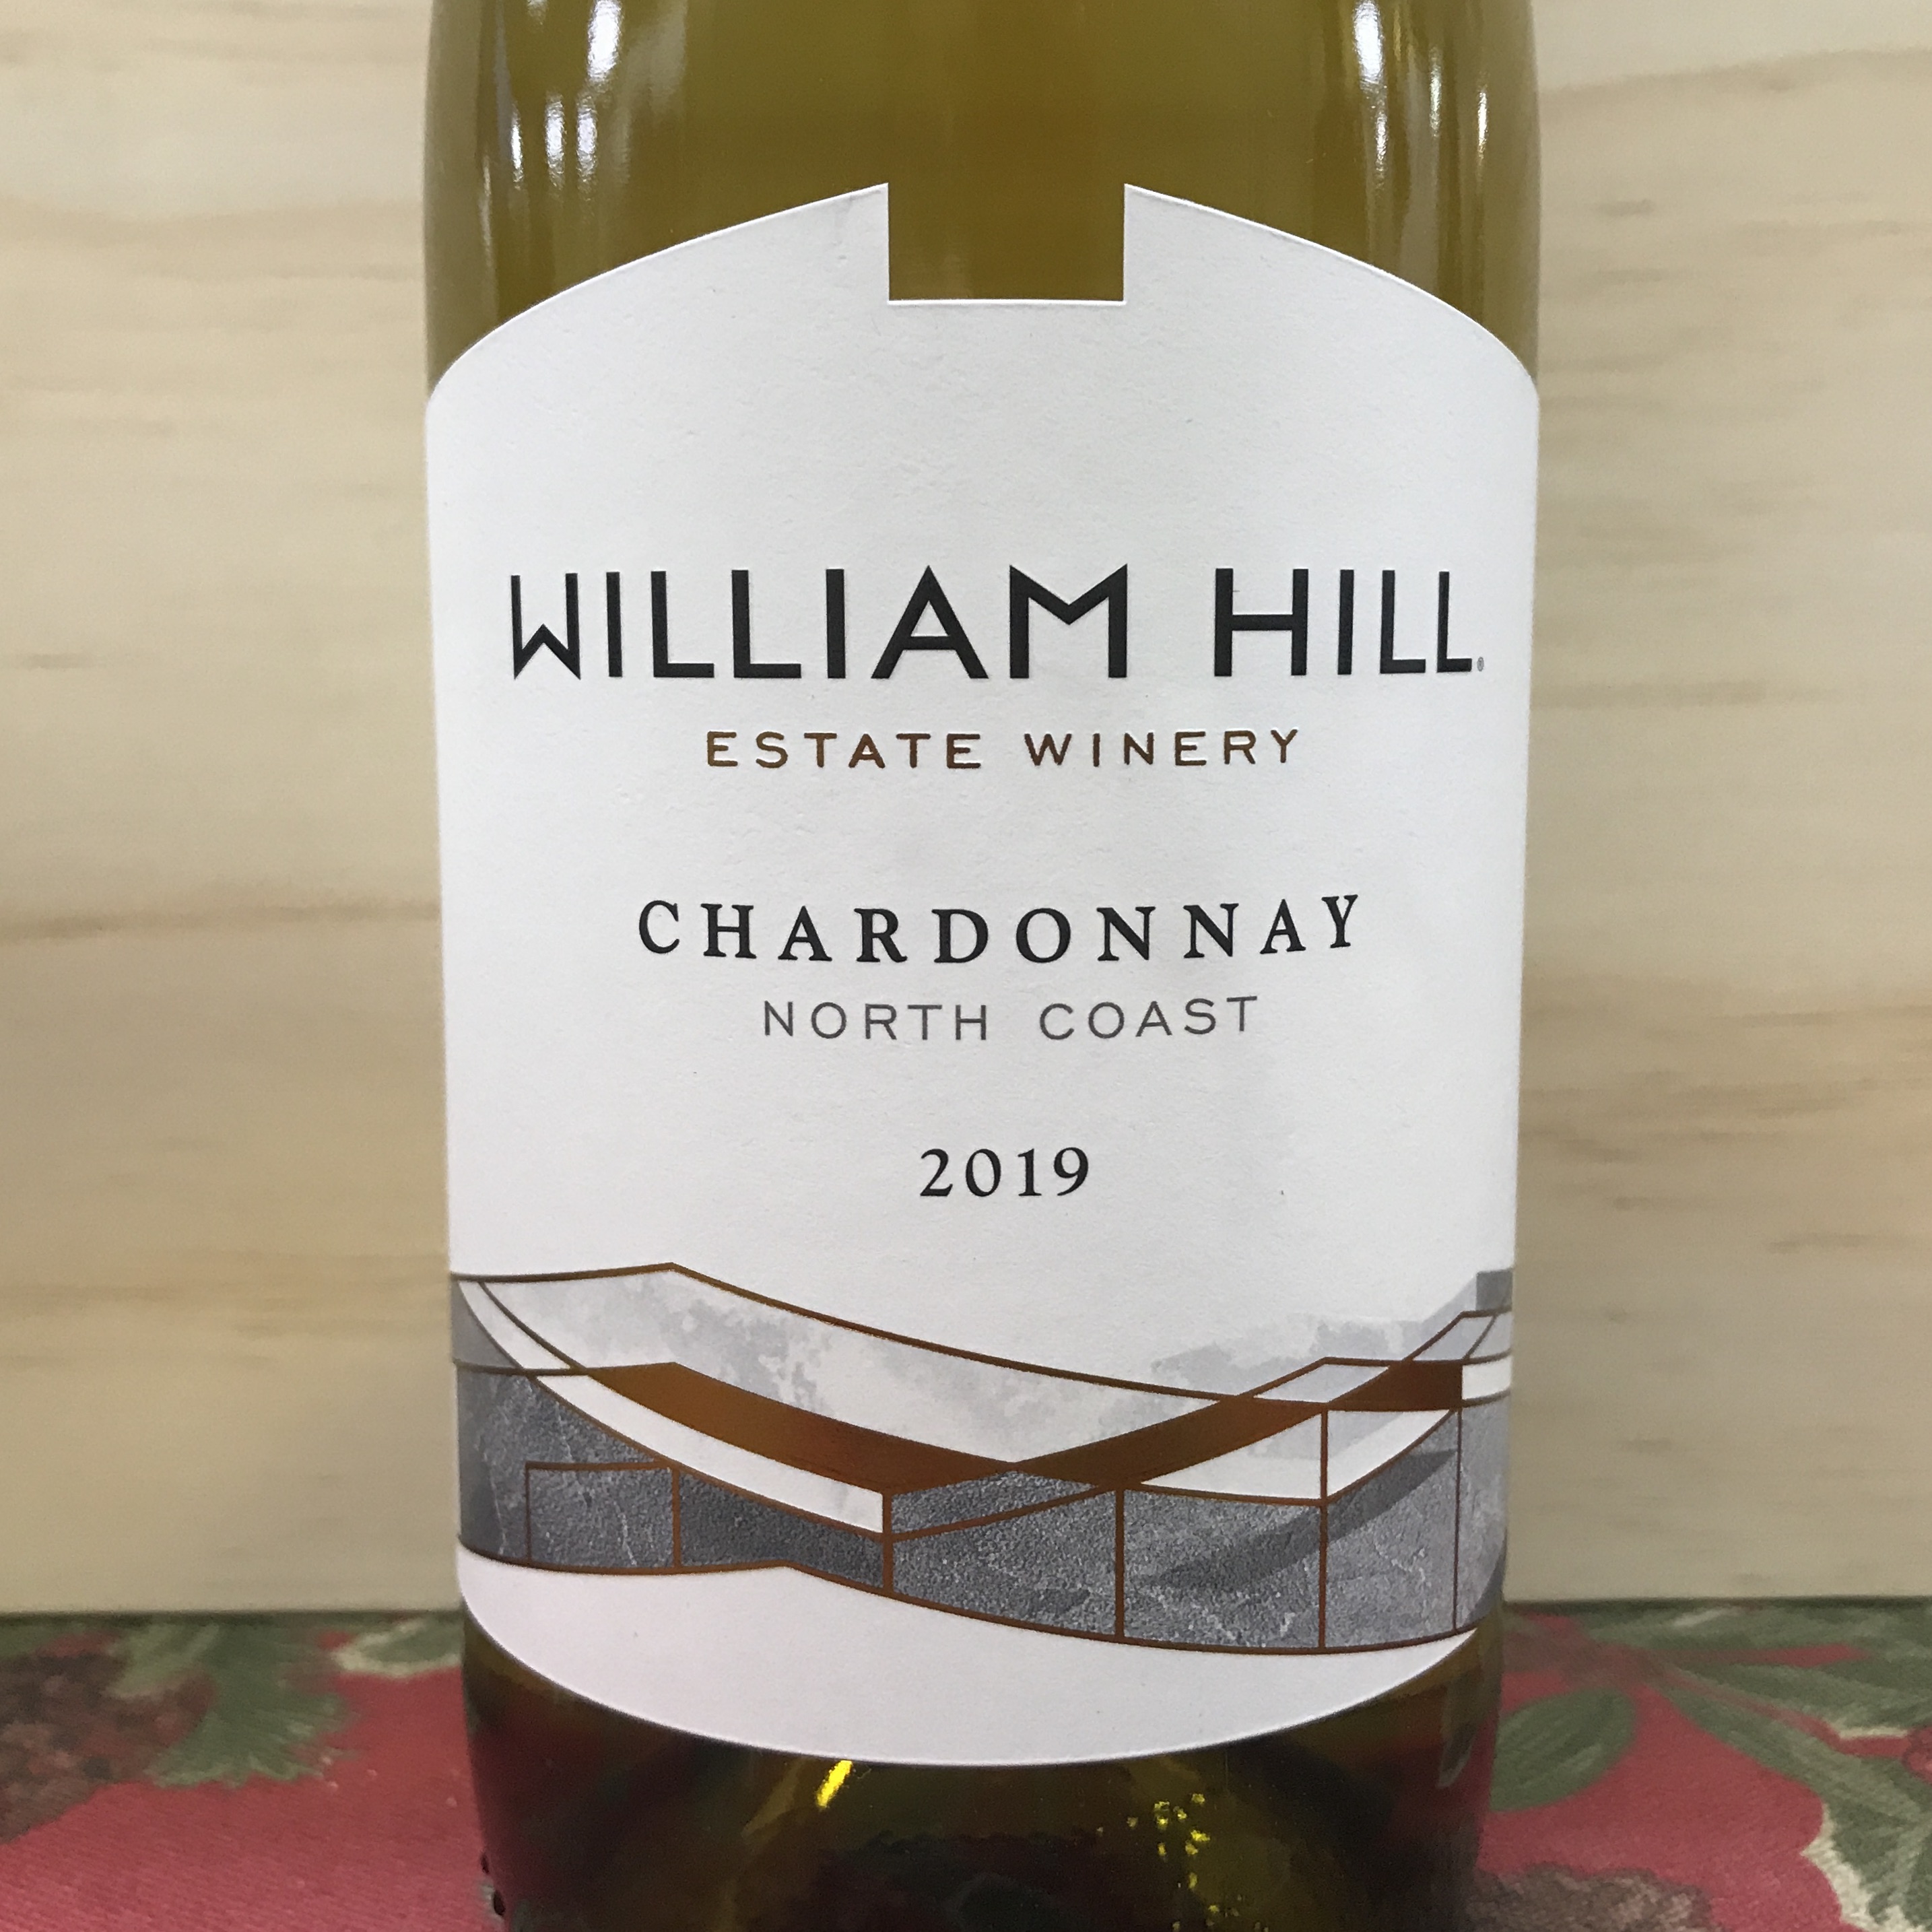 William Hill North Coast Chardonnay 2019